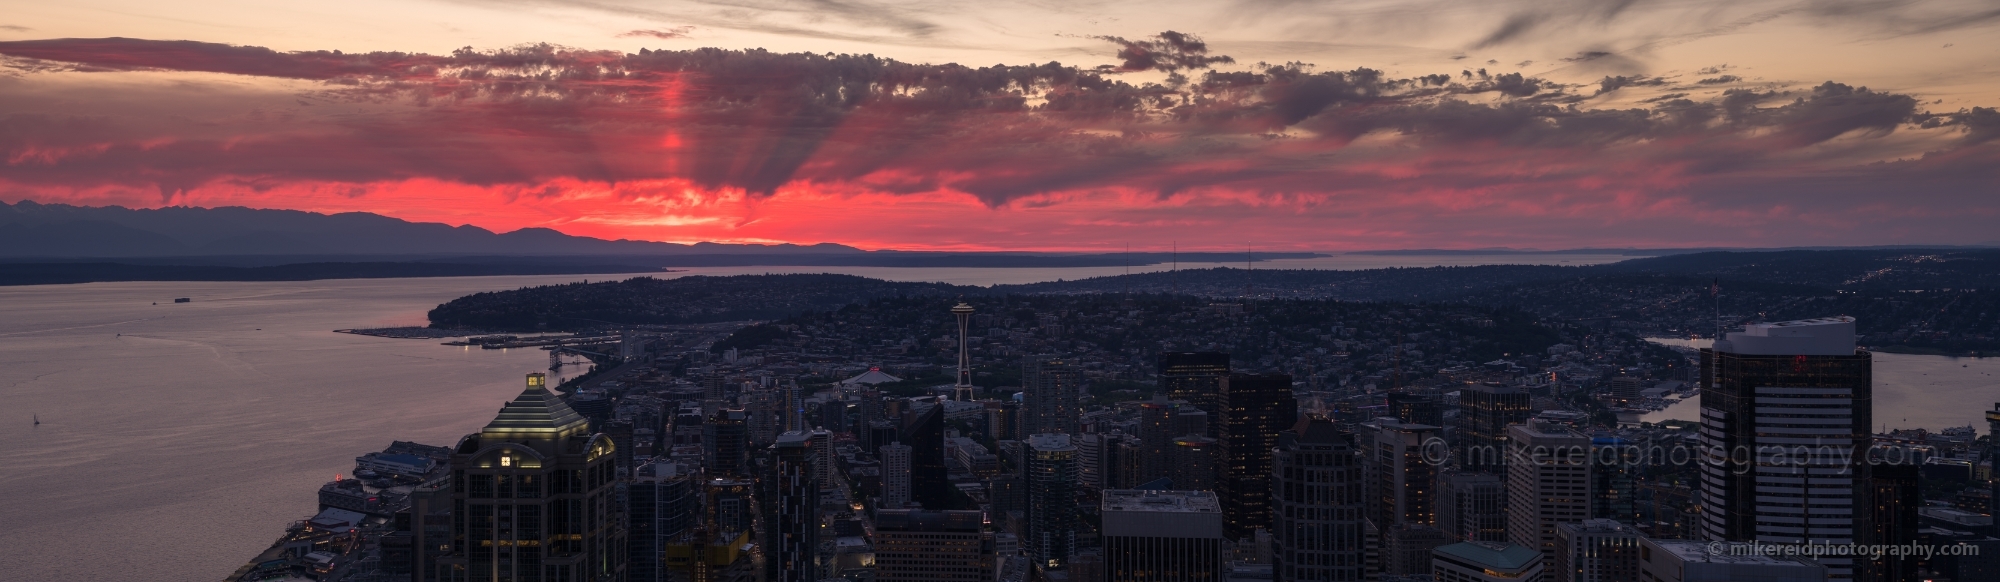 Seattle Photography Cityscape Sunset Skies Erupting Pano